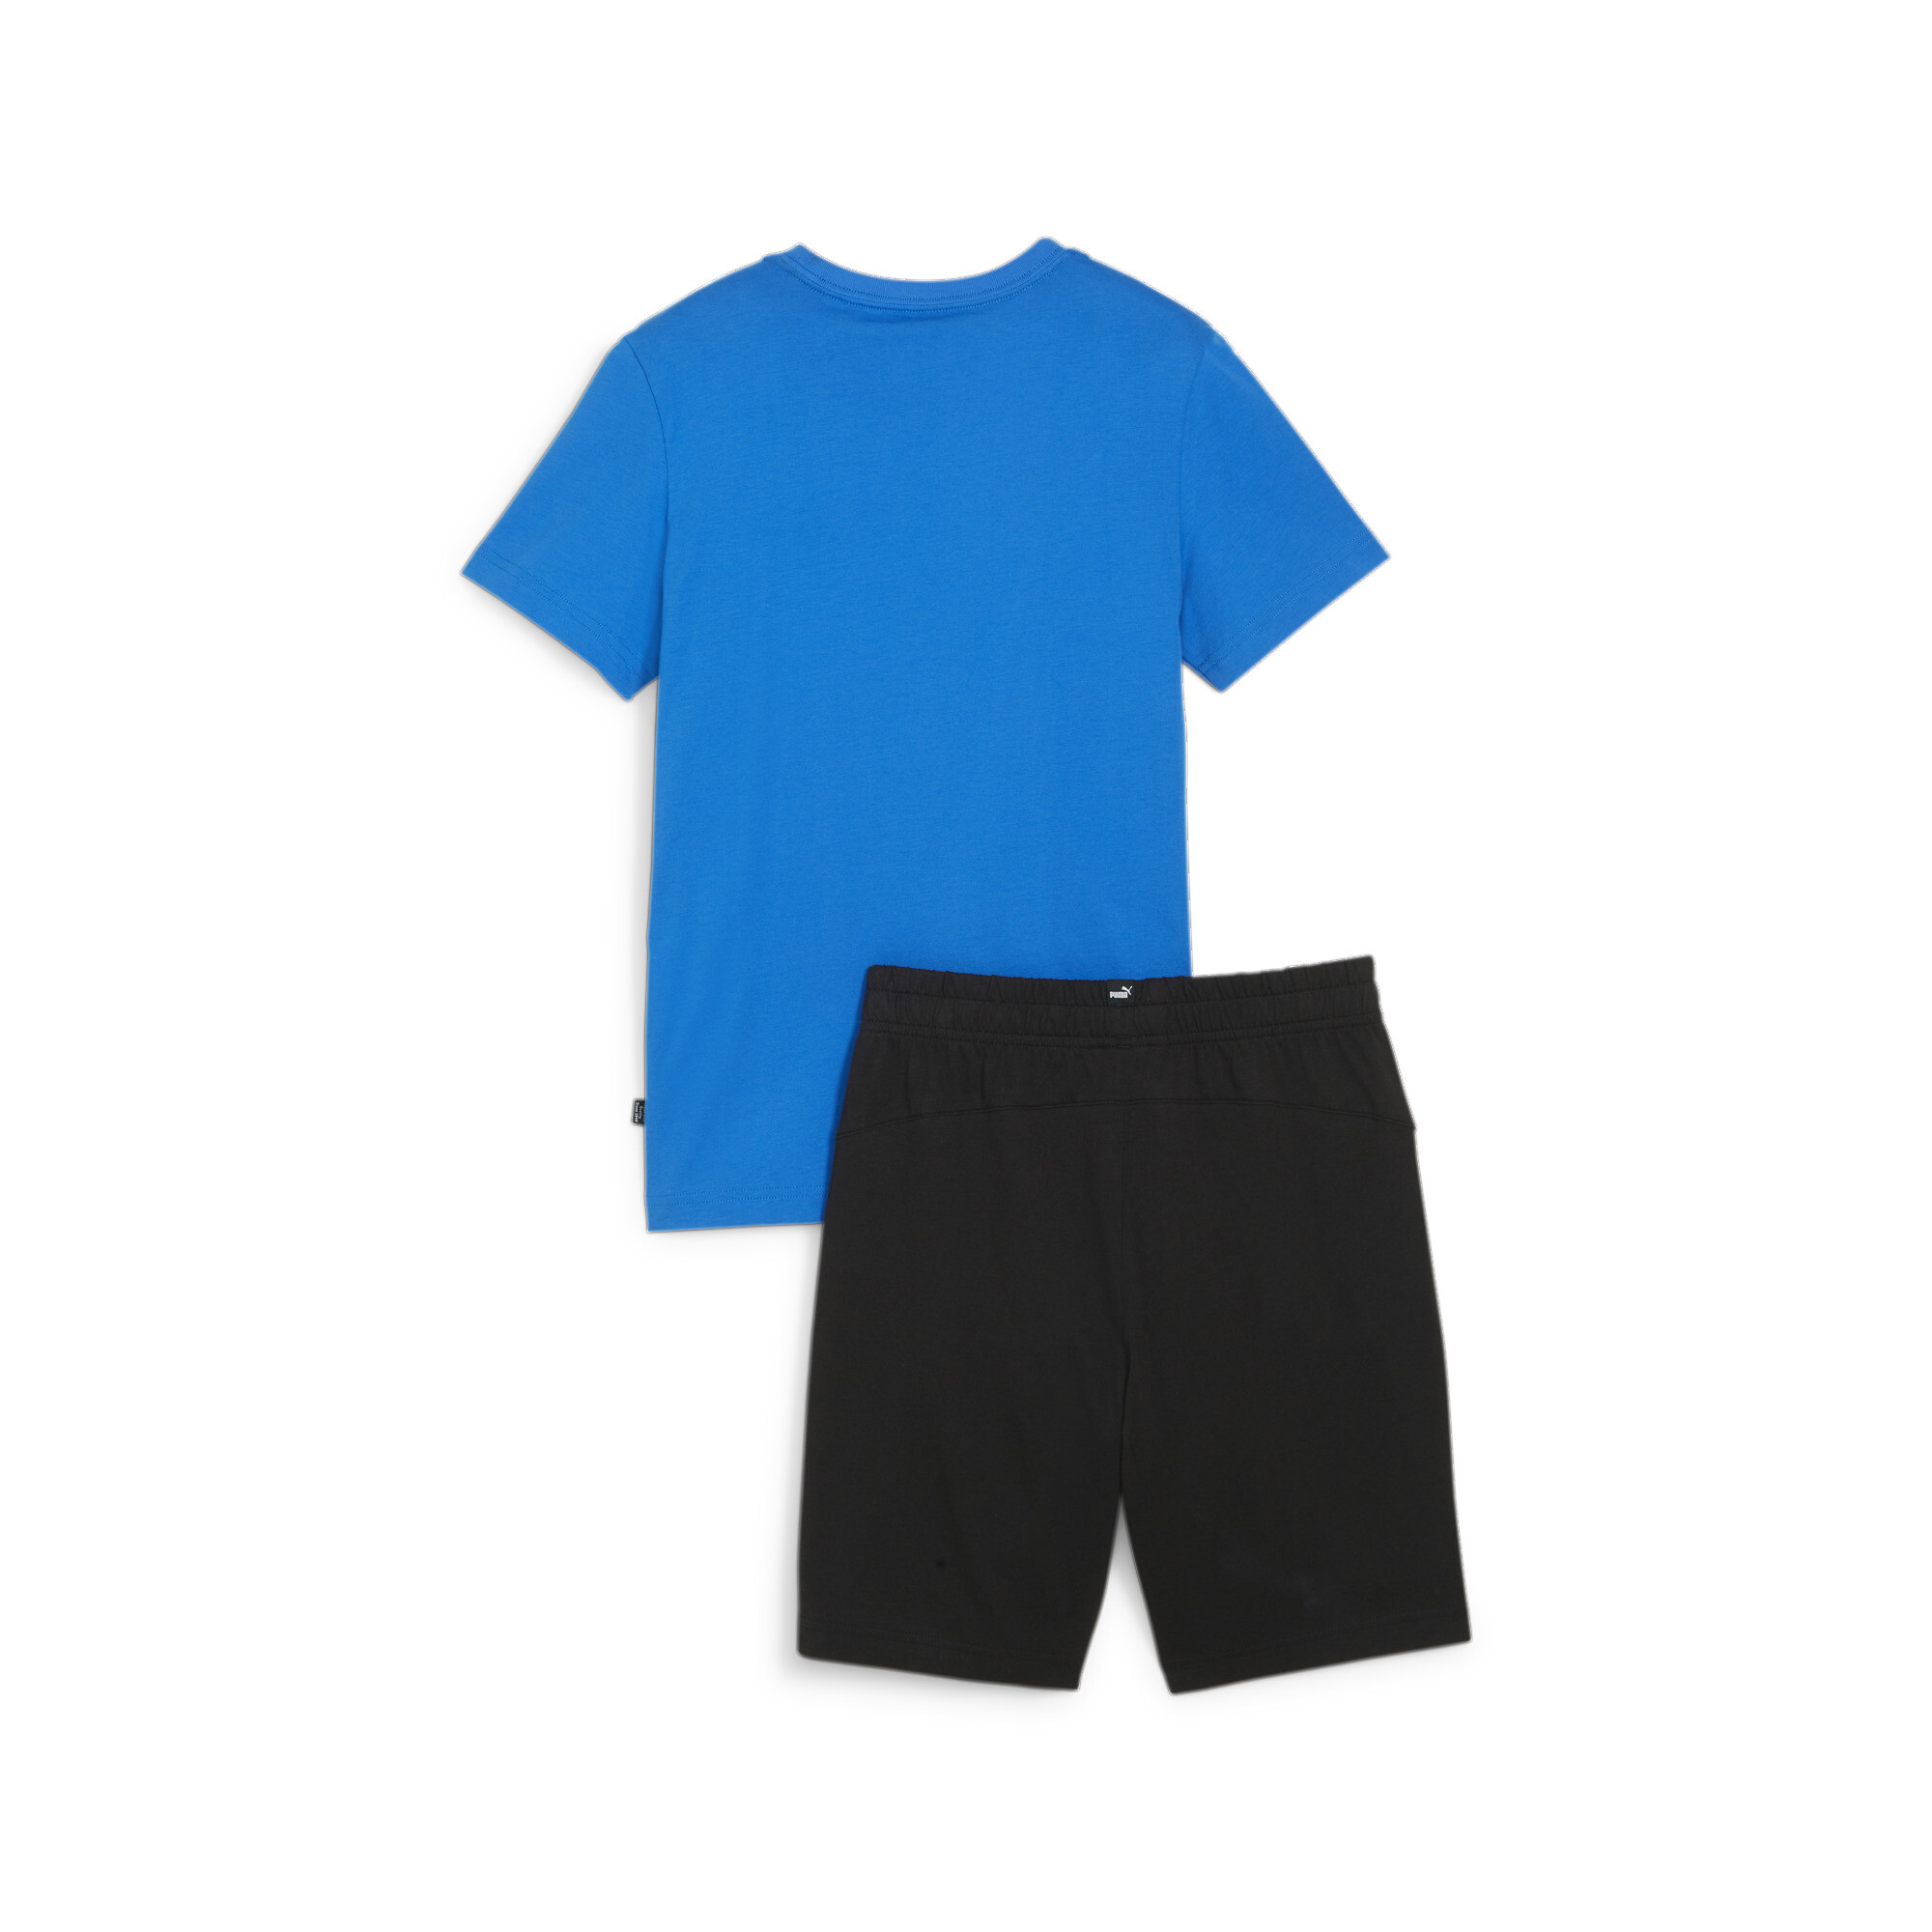 Men's Puma Jersey Youth Shorts Set, Blue, Size 7-8Y, Clothing